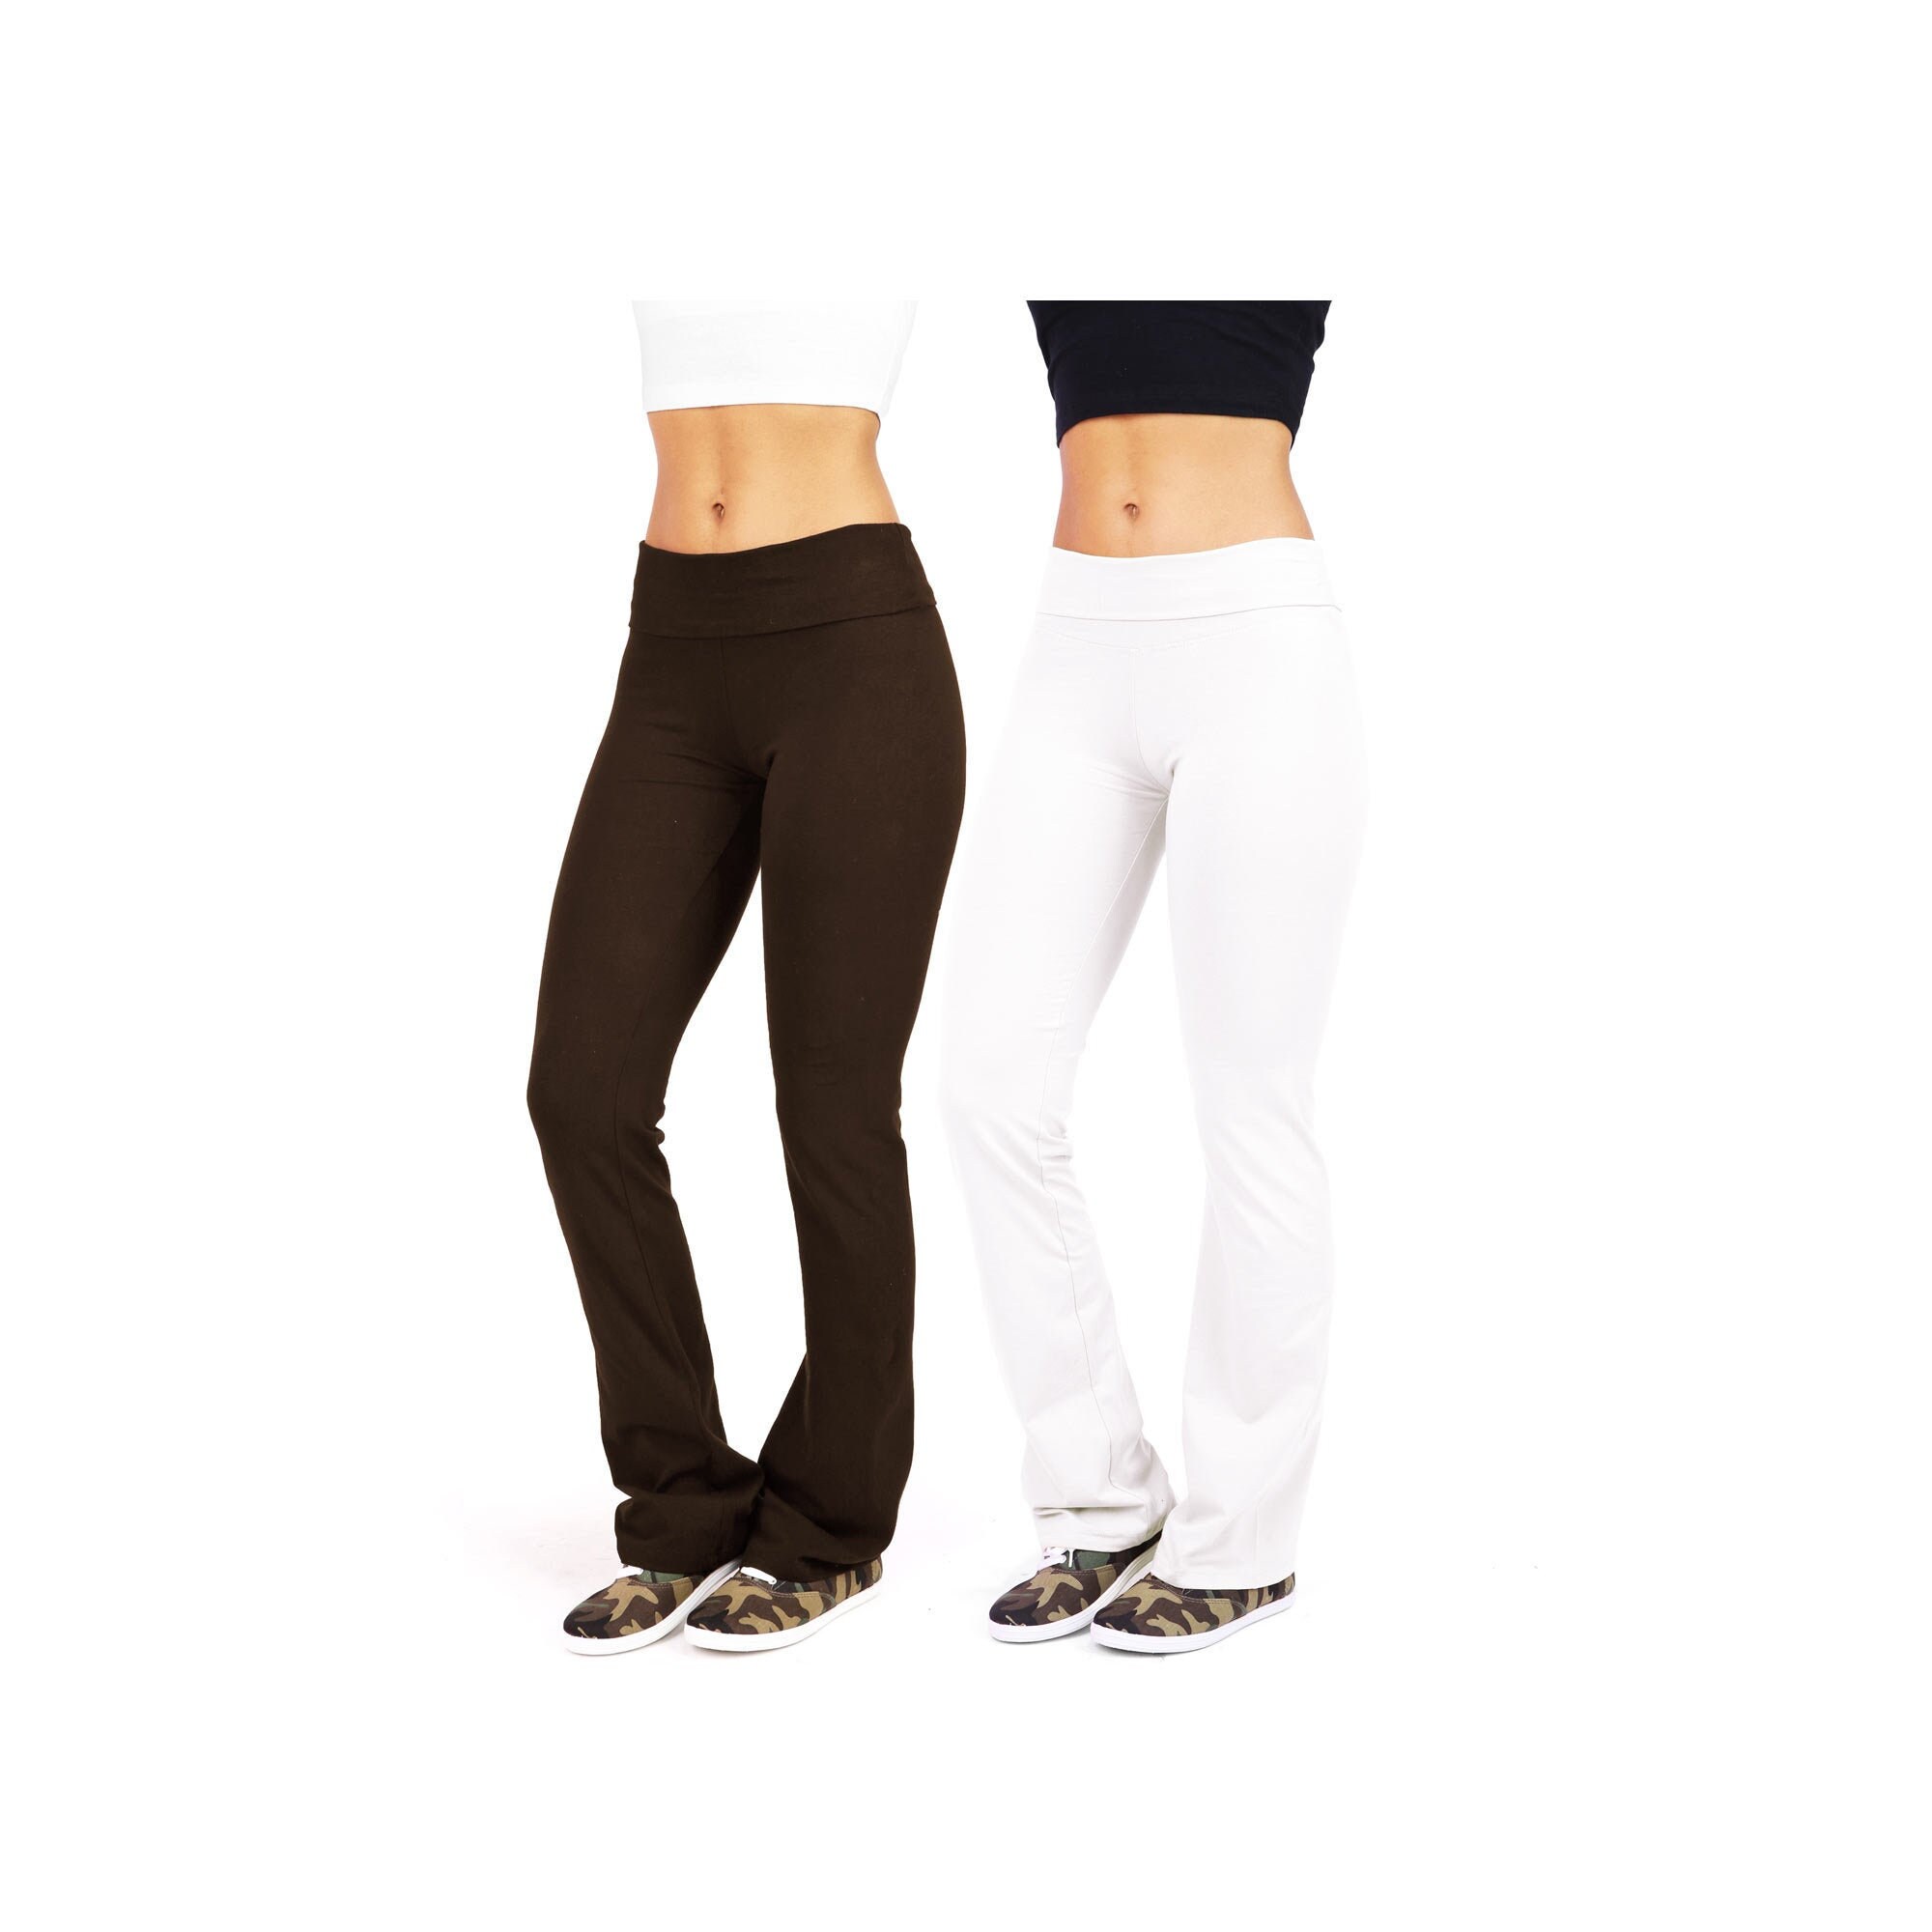 Viosi Yoga Pants for Women Bootcut Fold Over High Waisted Cotton